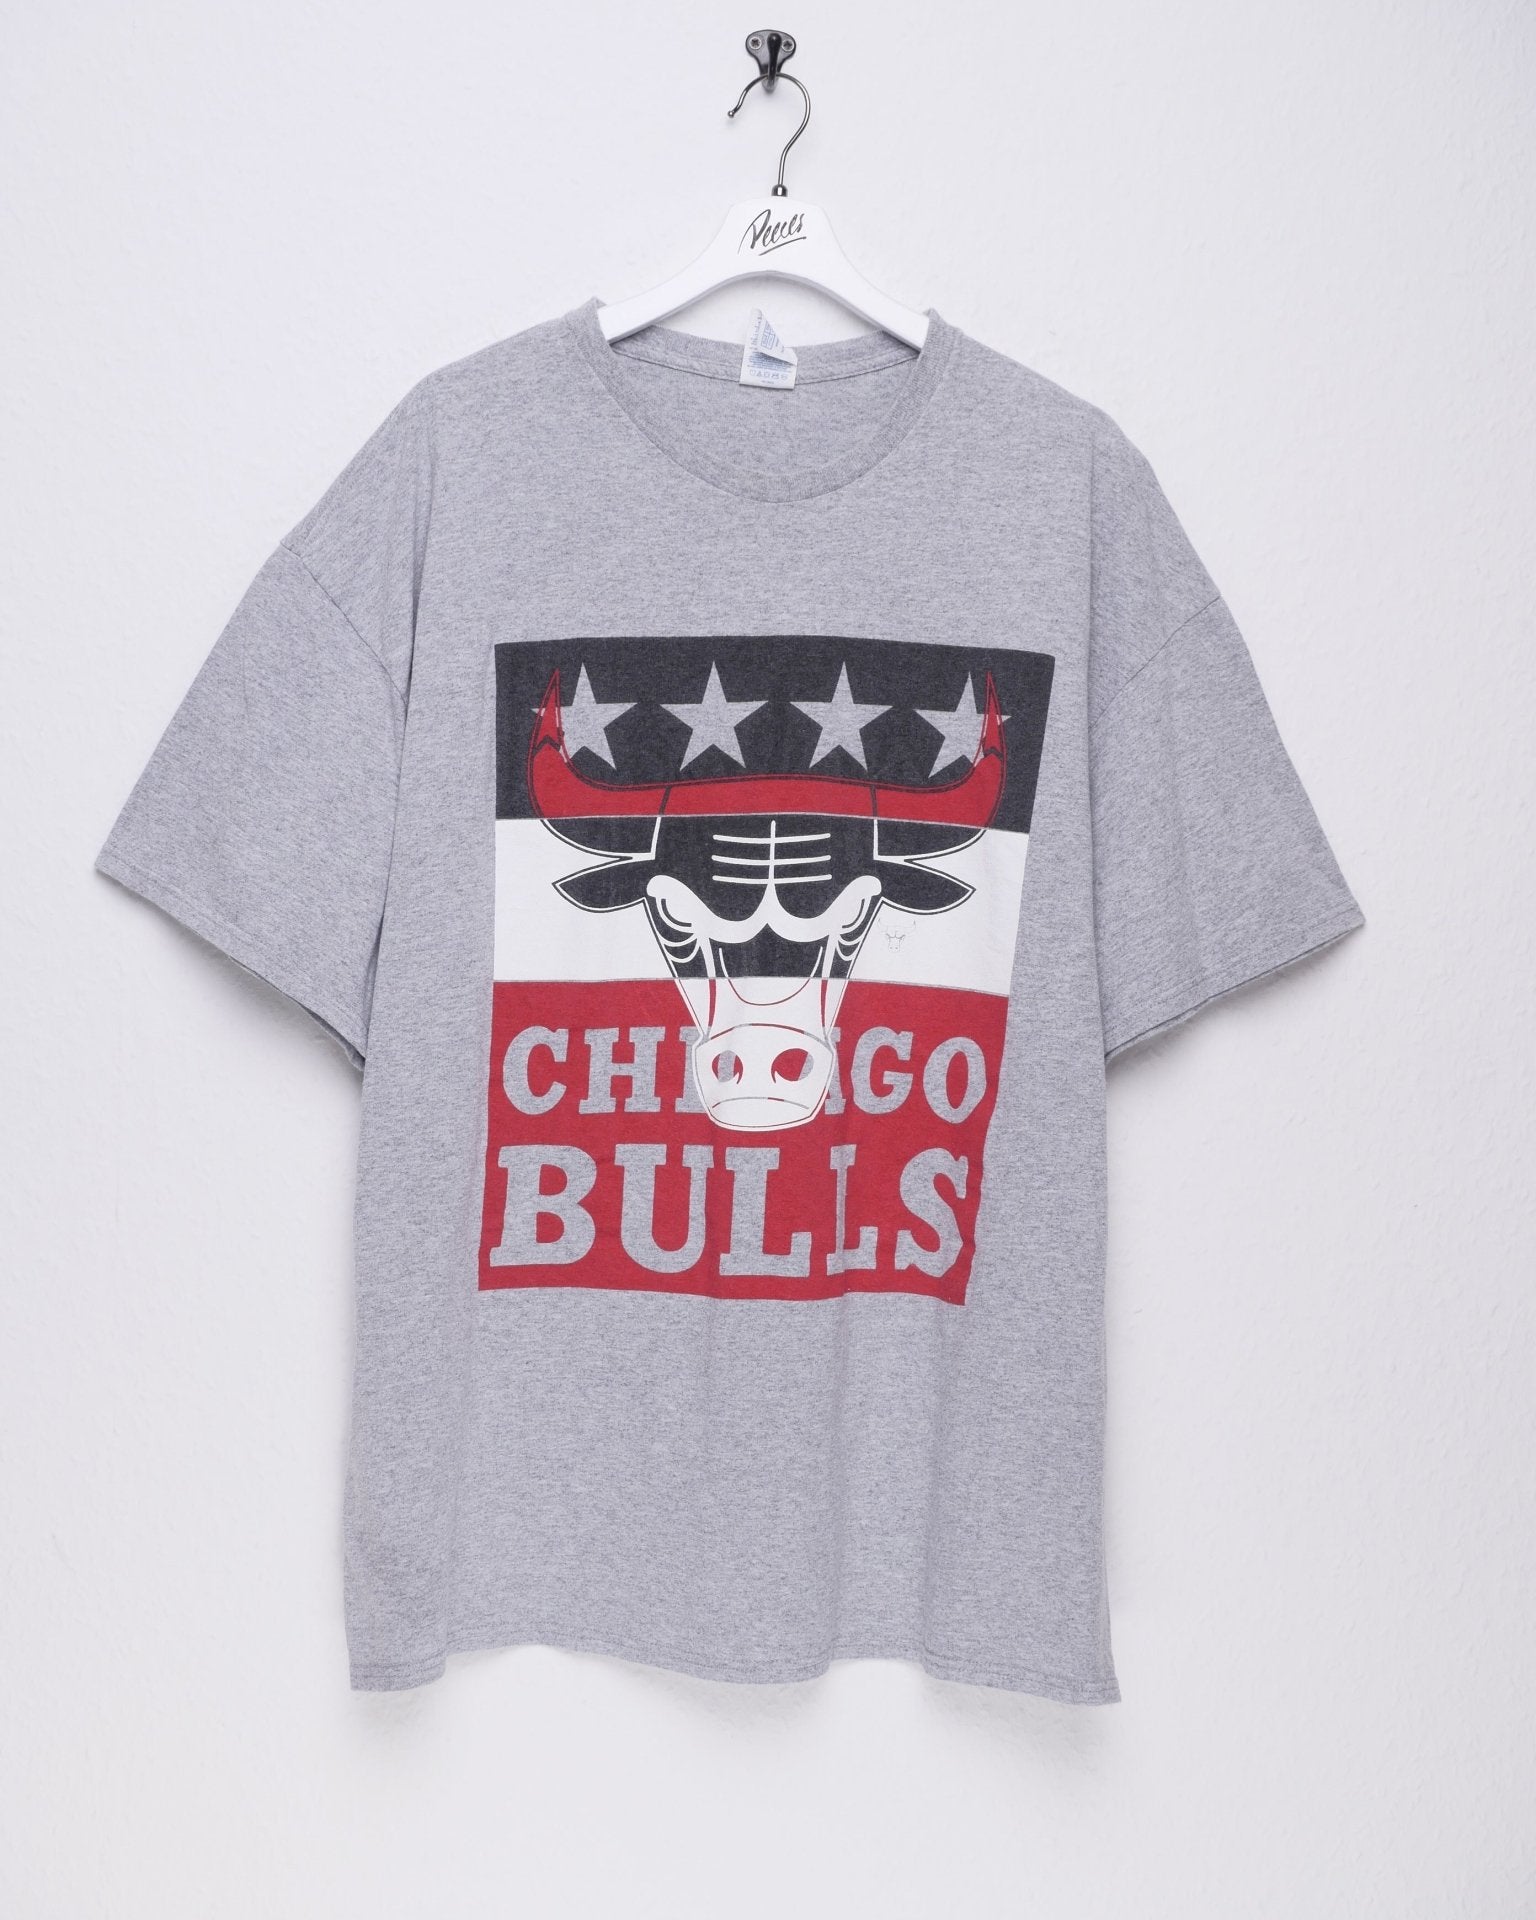 Chicago Bulls printed Logo grey Shirt - Peeces